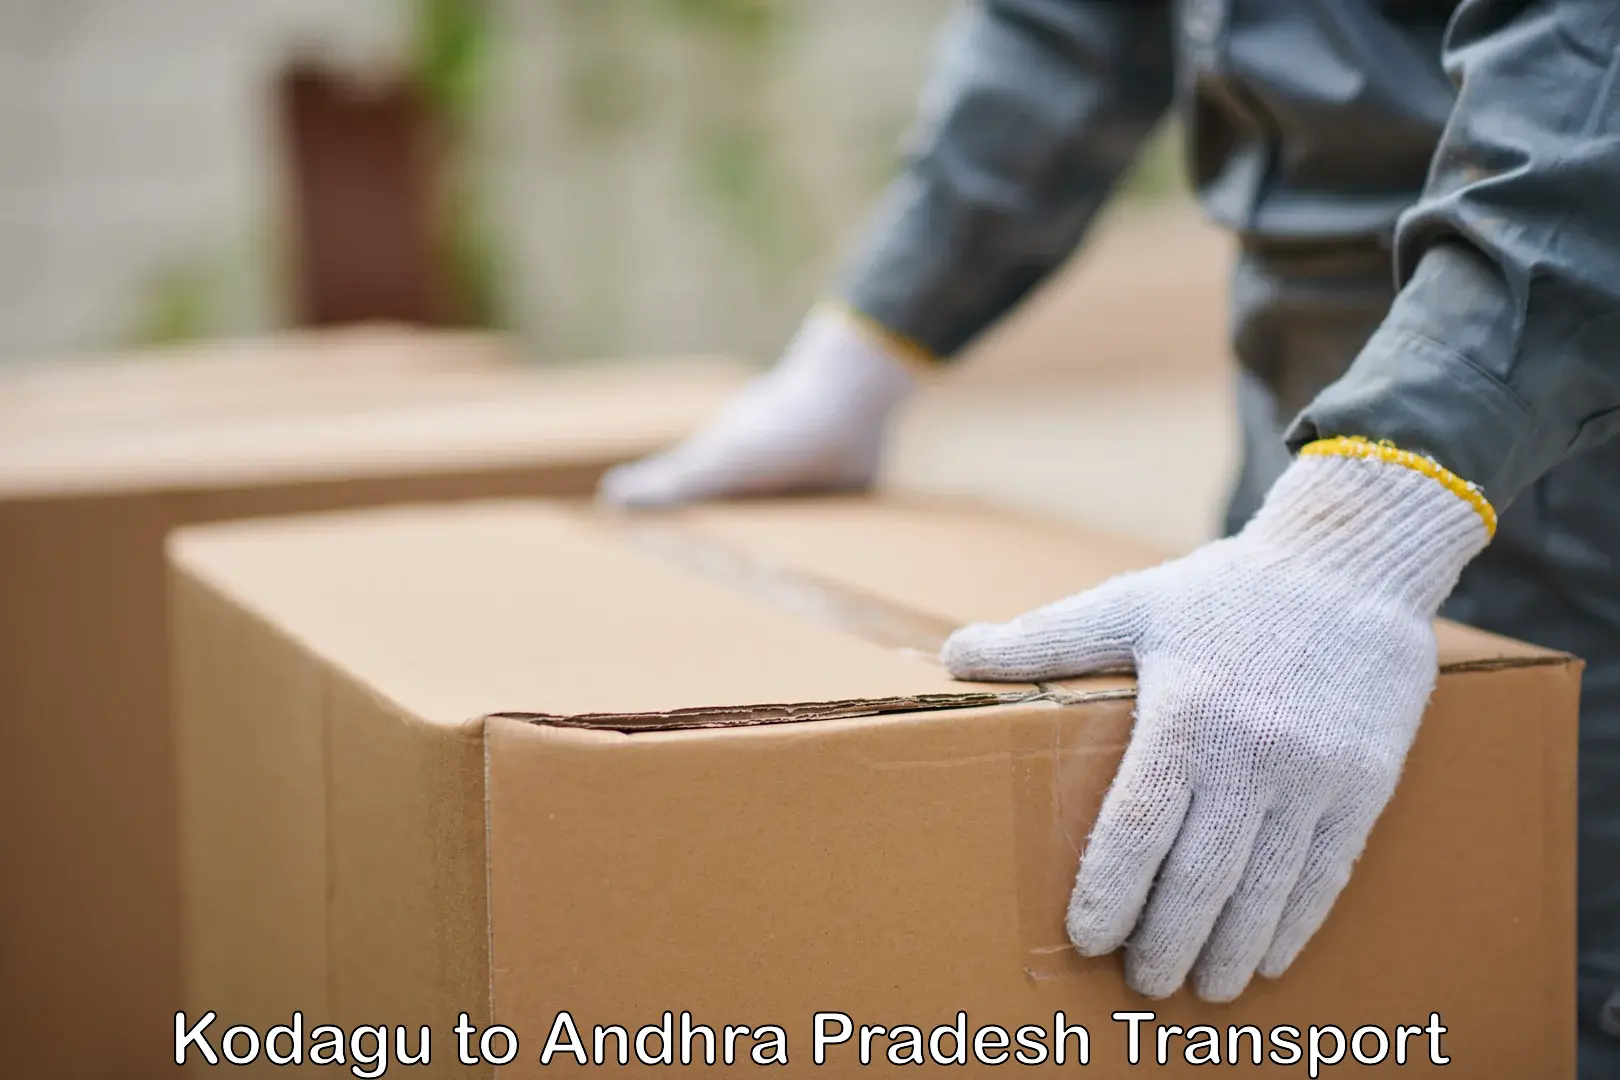 Truck transport companies in India Kodagu to Ichchapuram